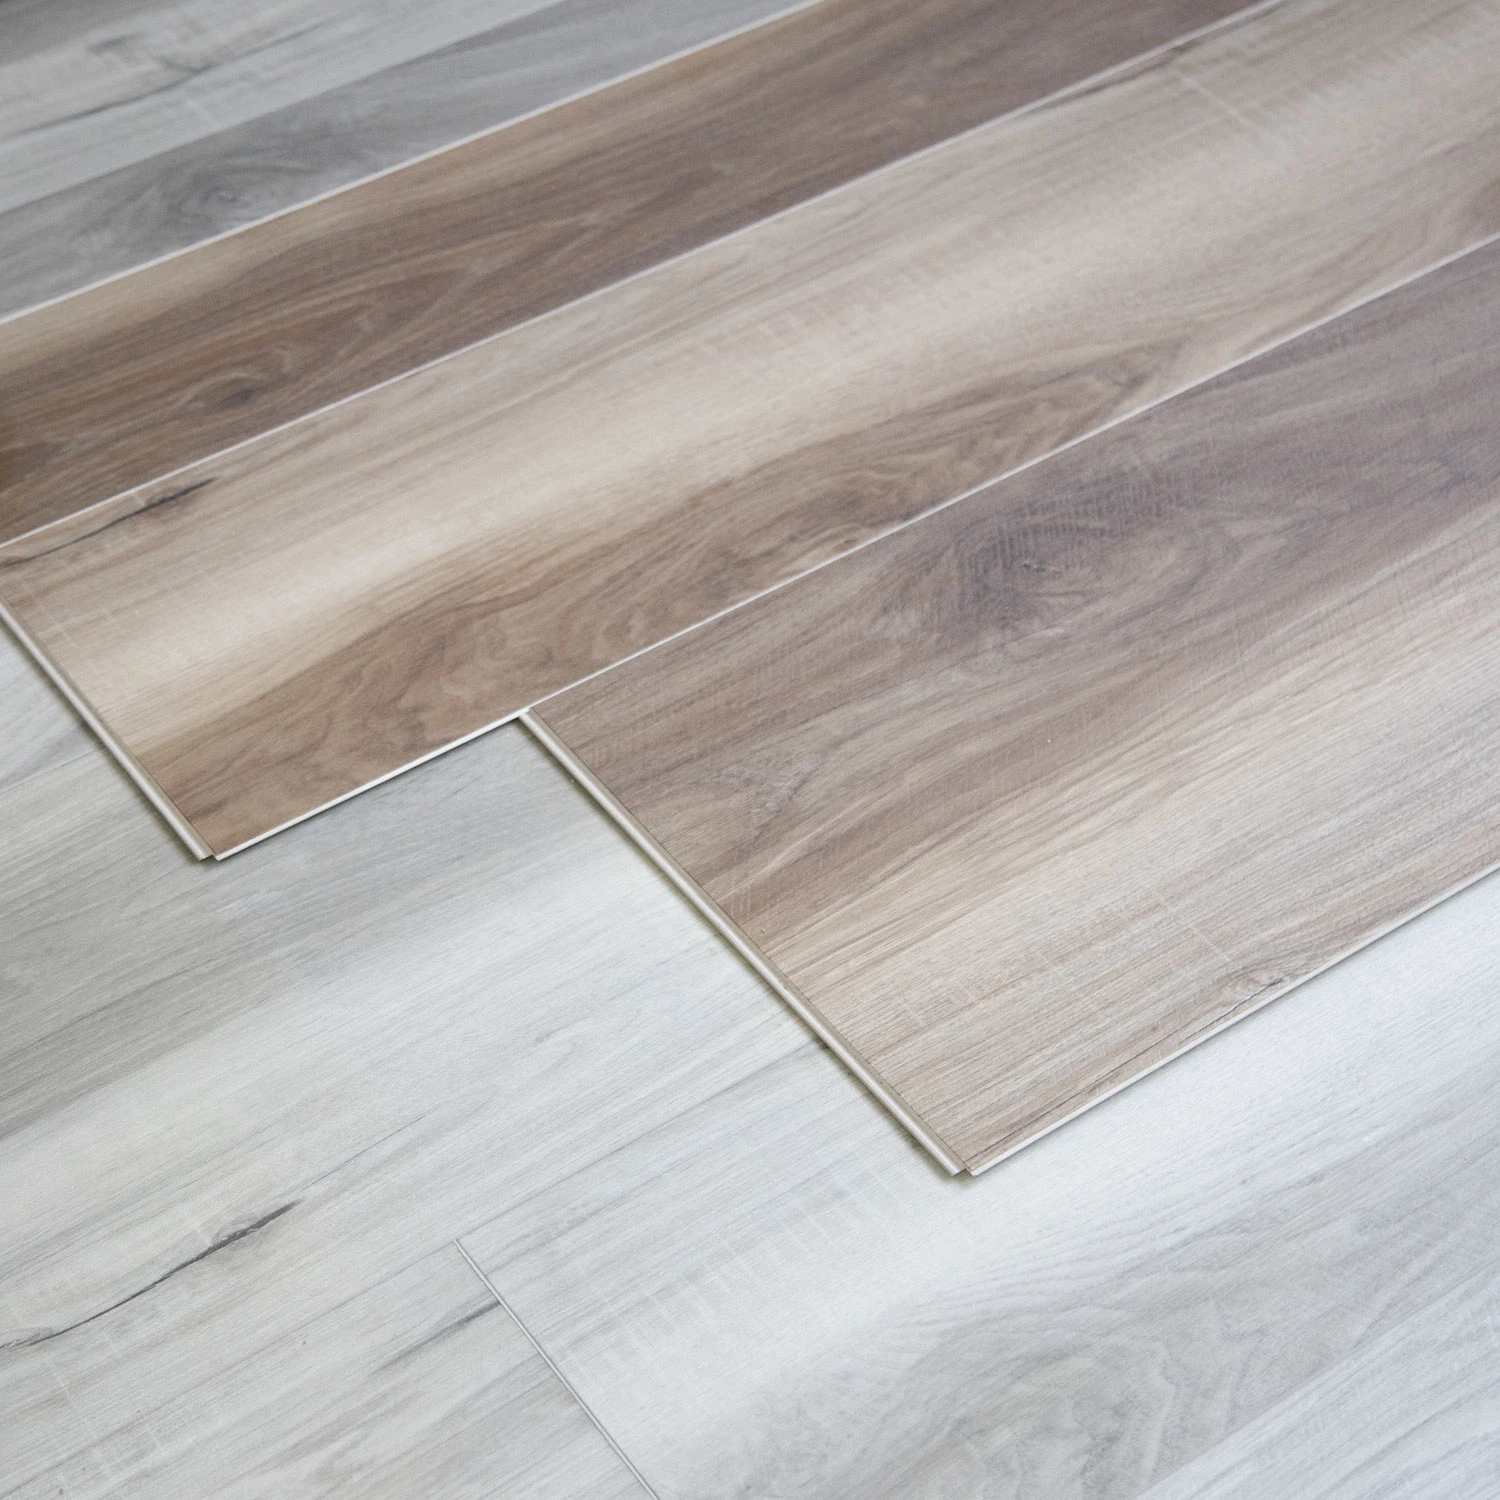 Fireproof High Gloss Marble Design PVC Vinyl Slated Flooring Lvt Flooring with Unilin Click